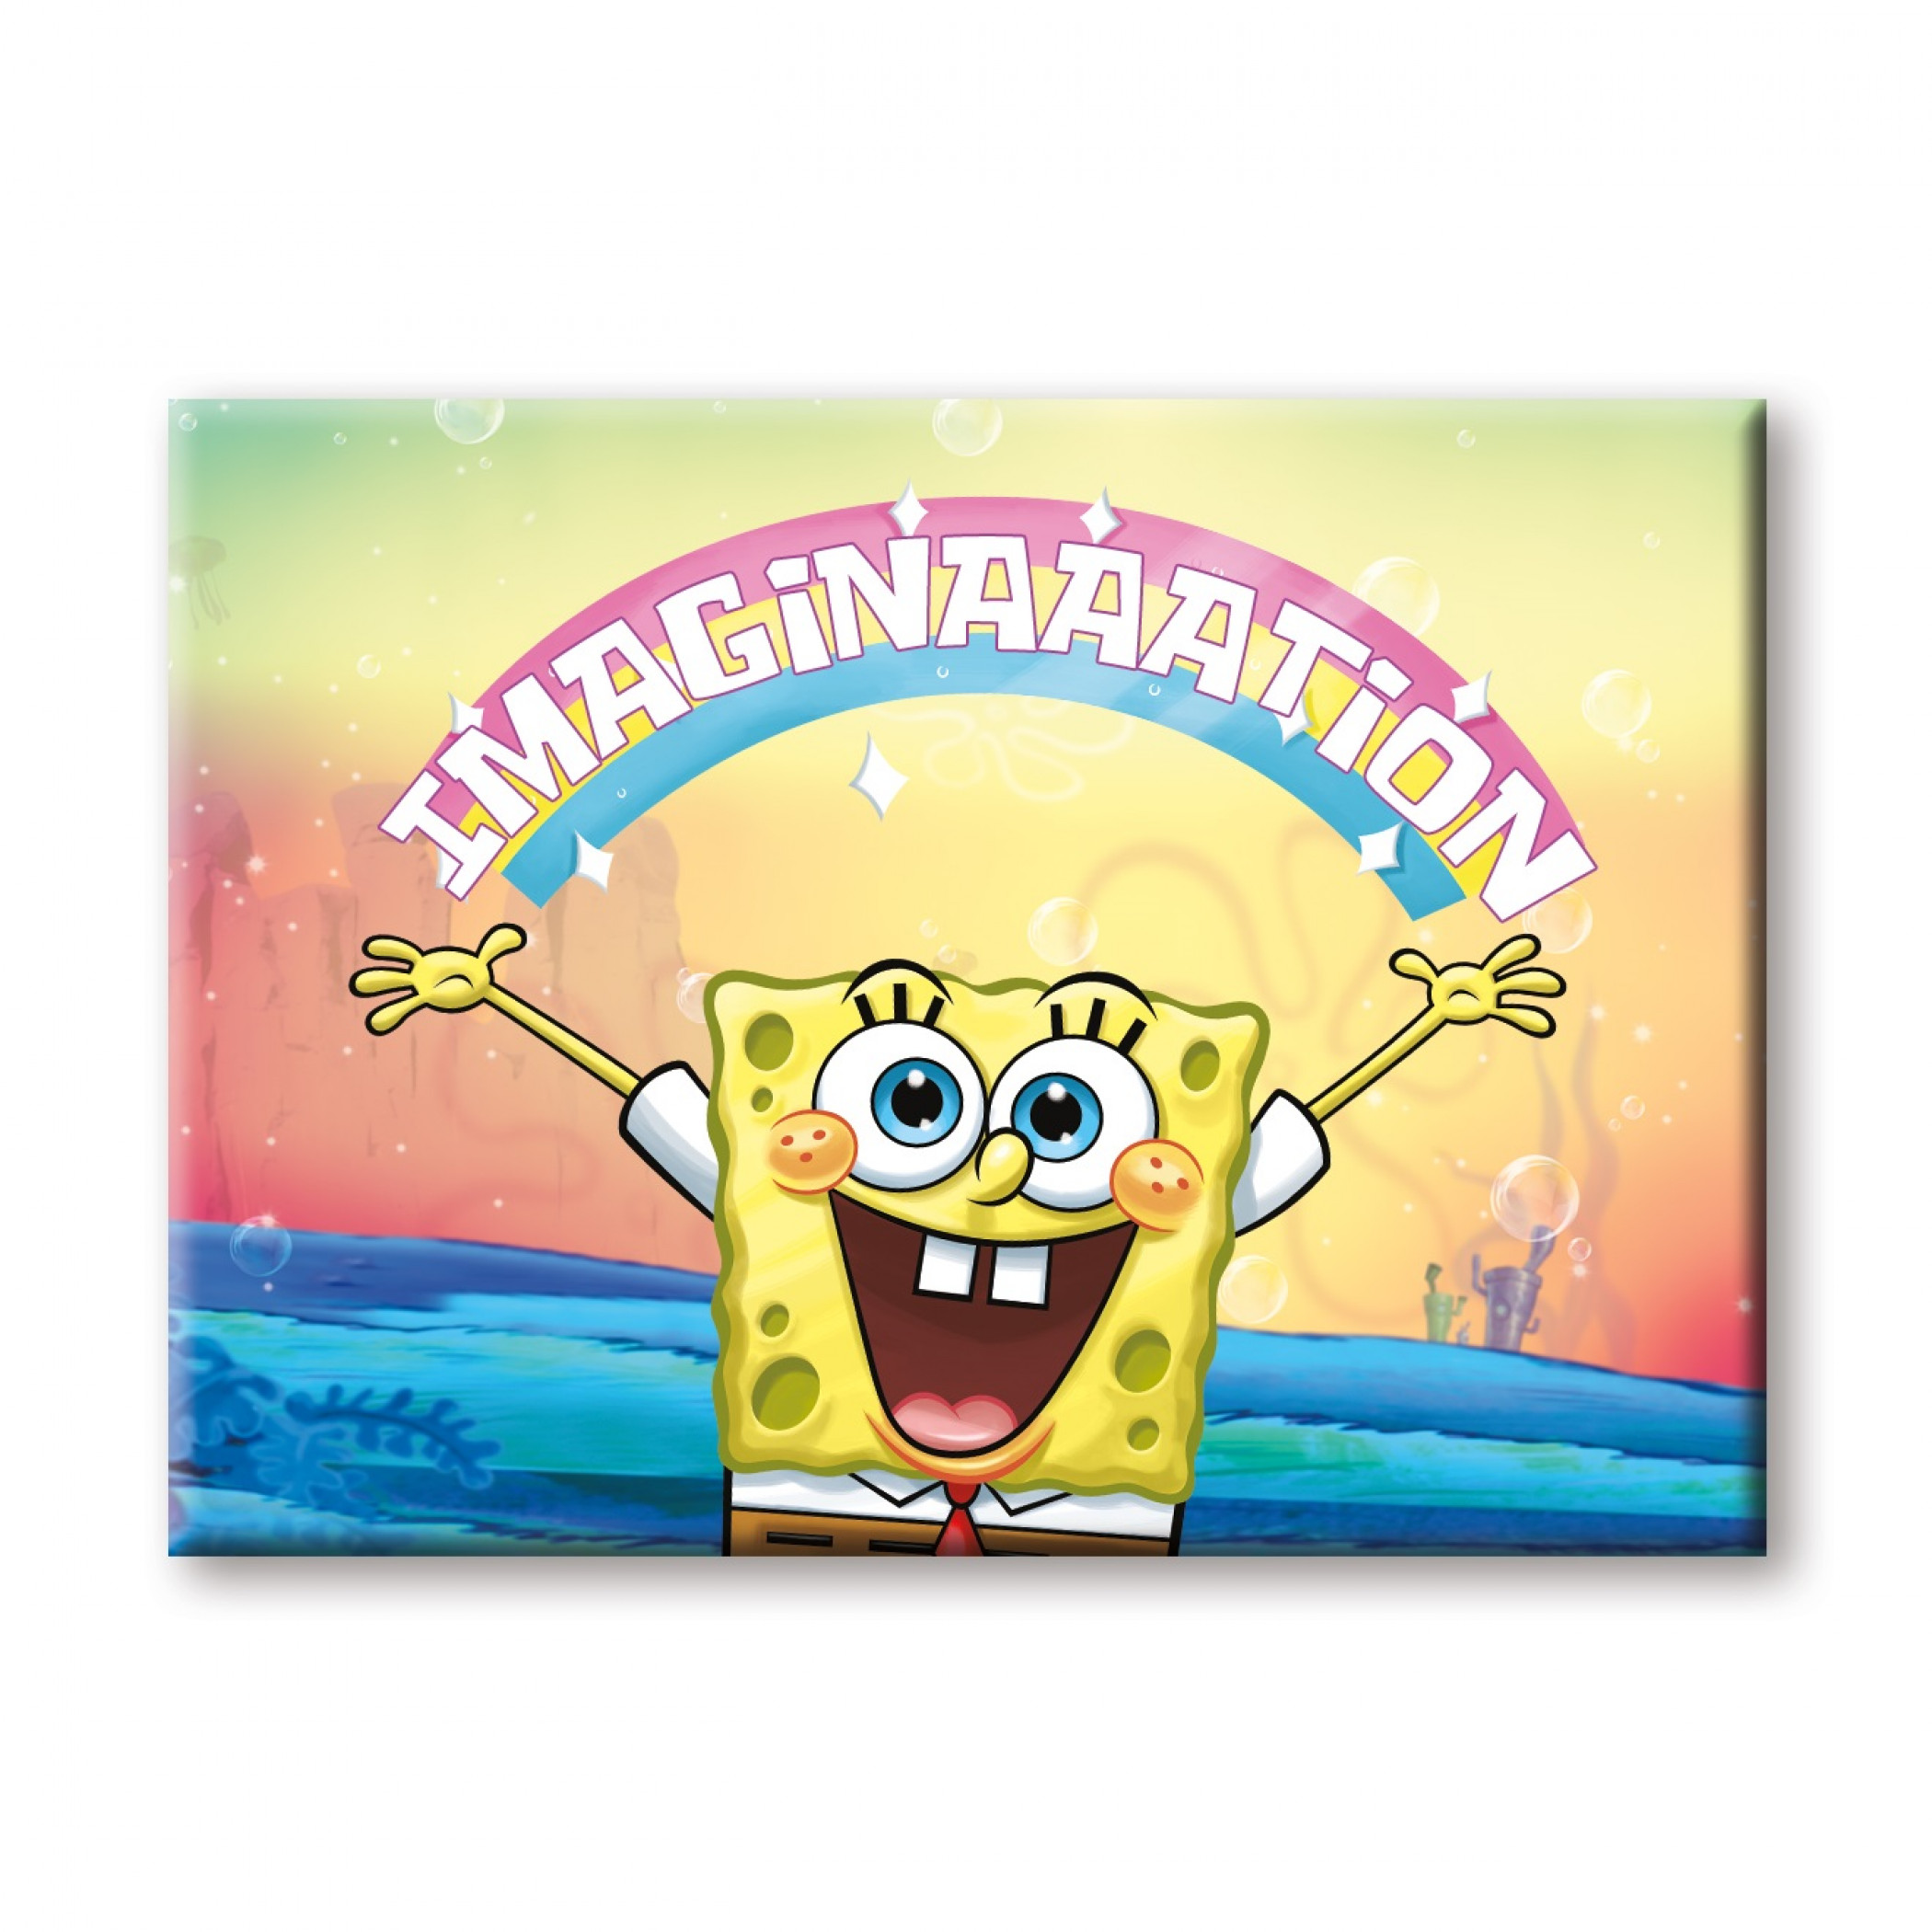 SpongeBob SquarePants Imagination Magnet